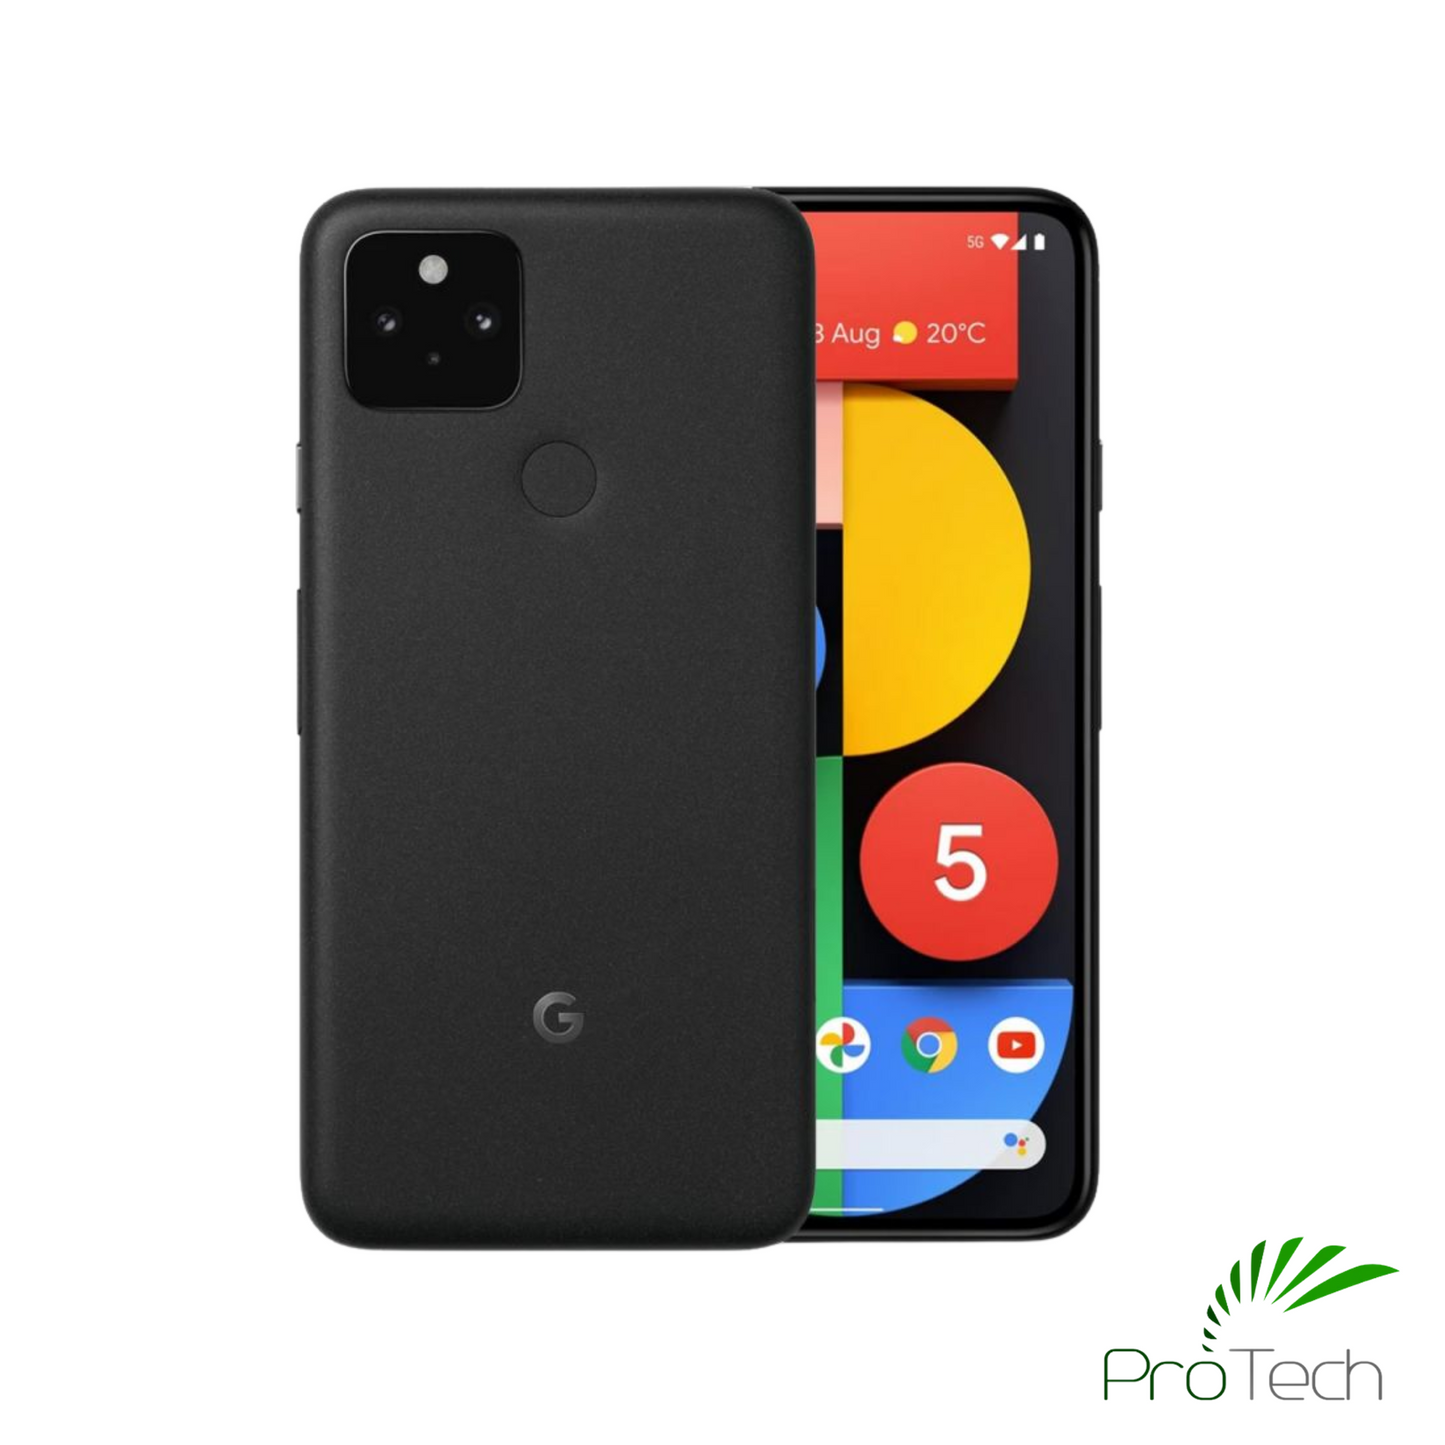 Google Pixel 5 5G | Green/Black |128GB